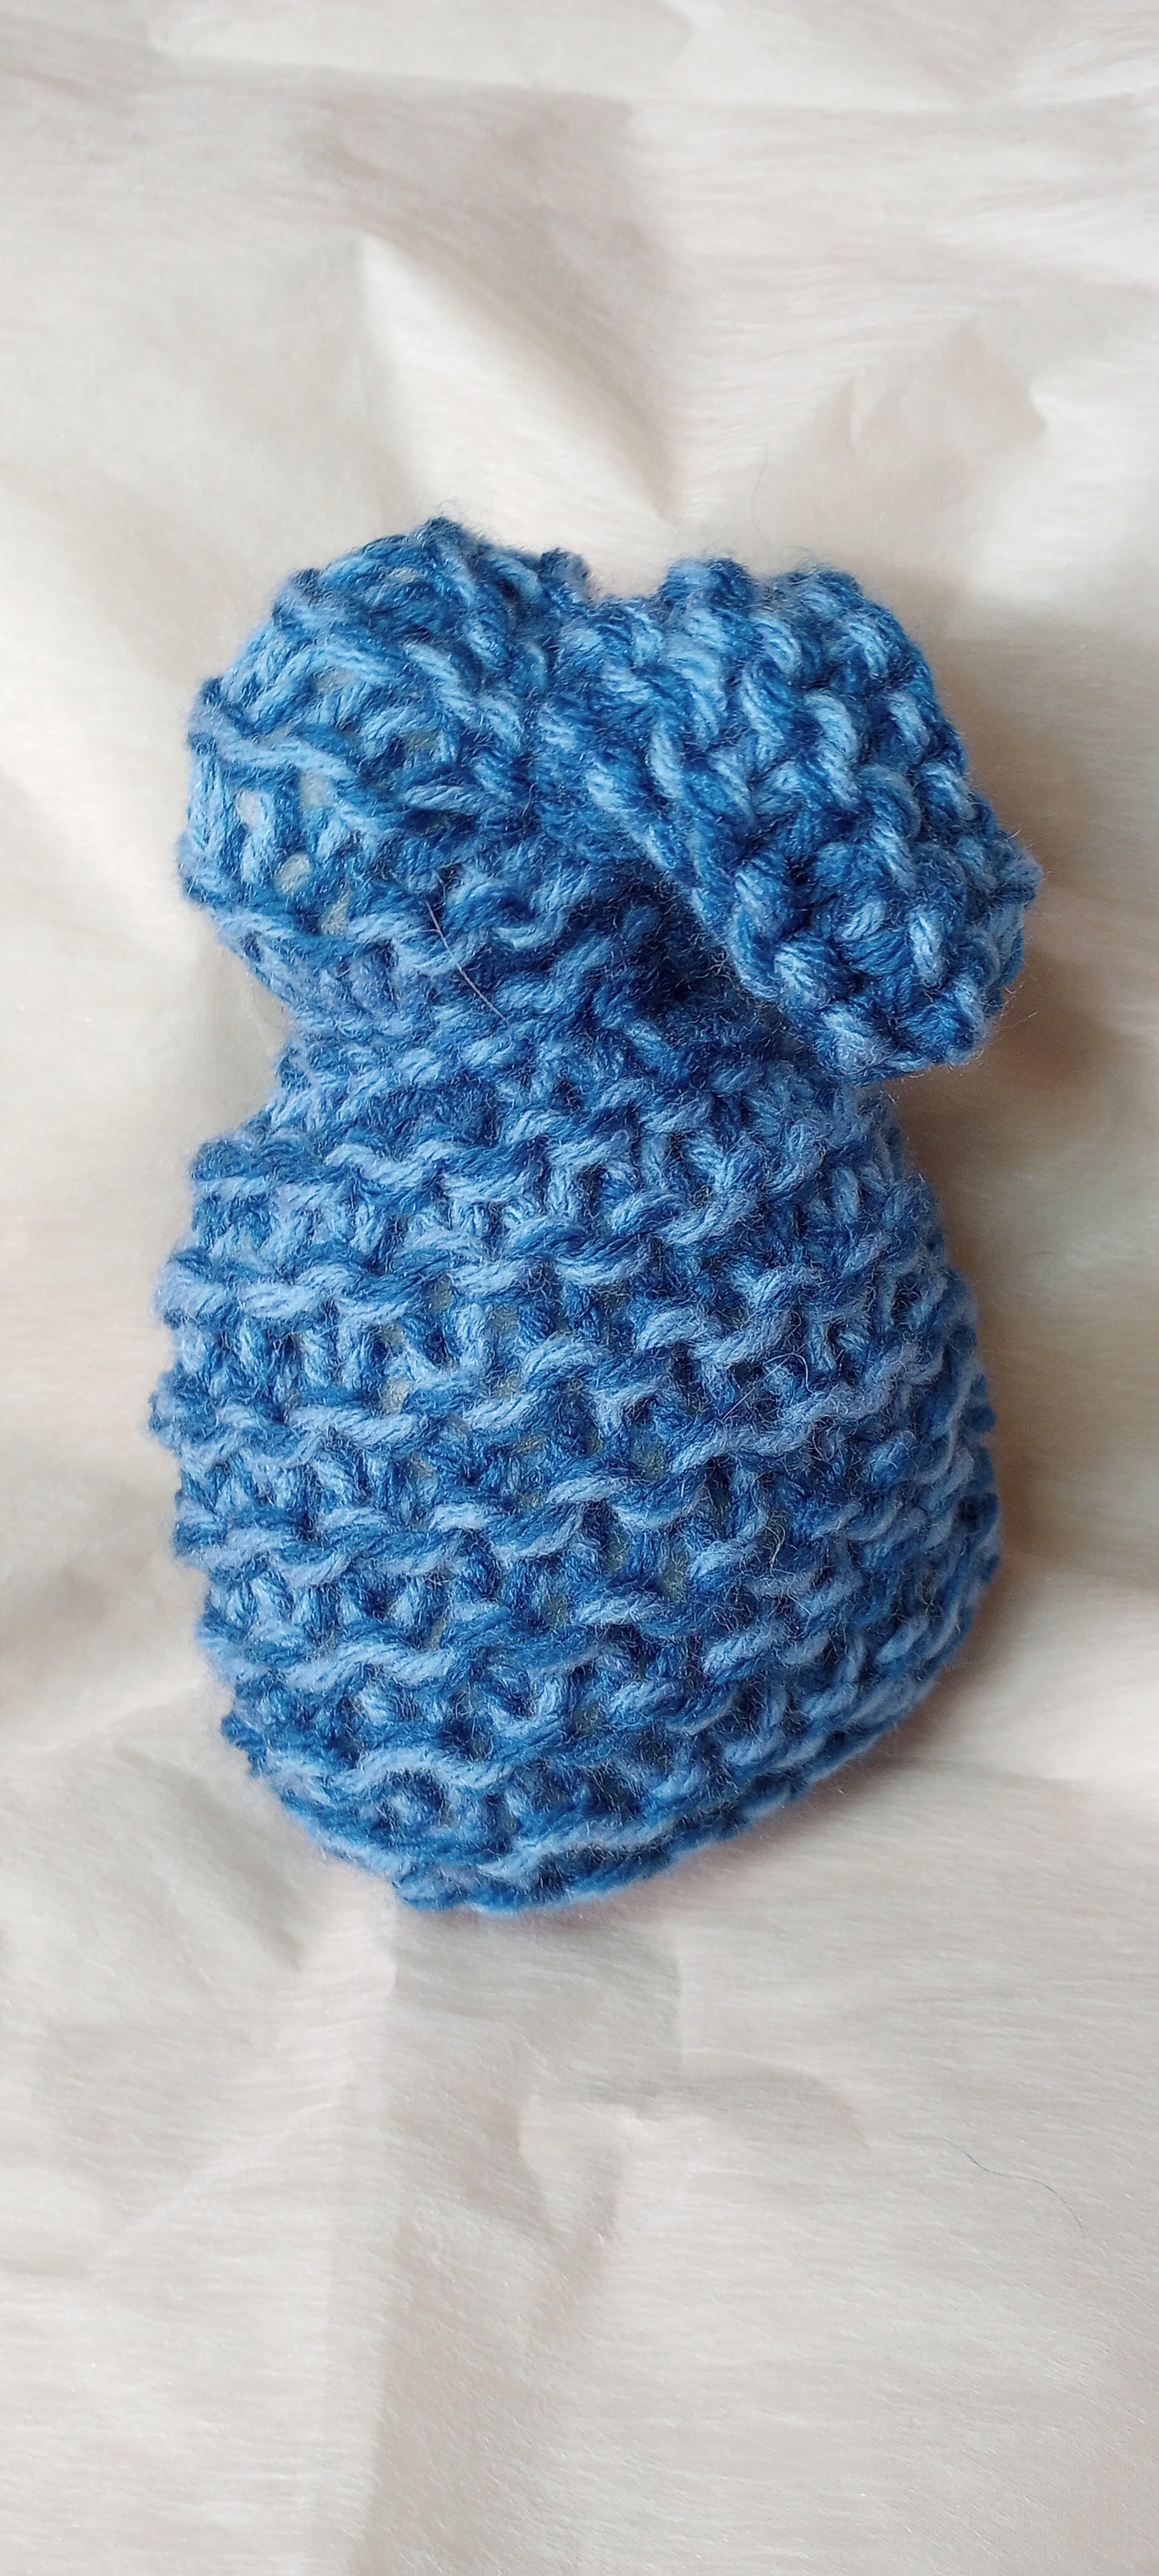 Blue Bunny Rabbit Stuffed Animal